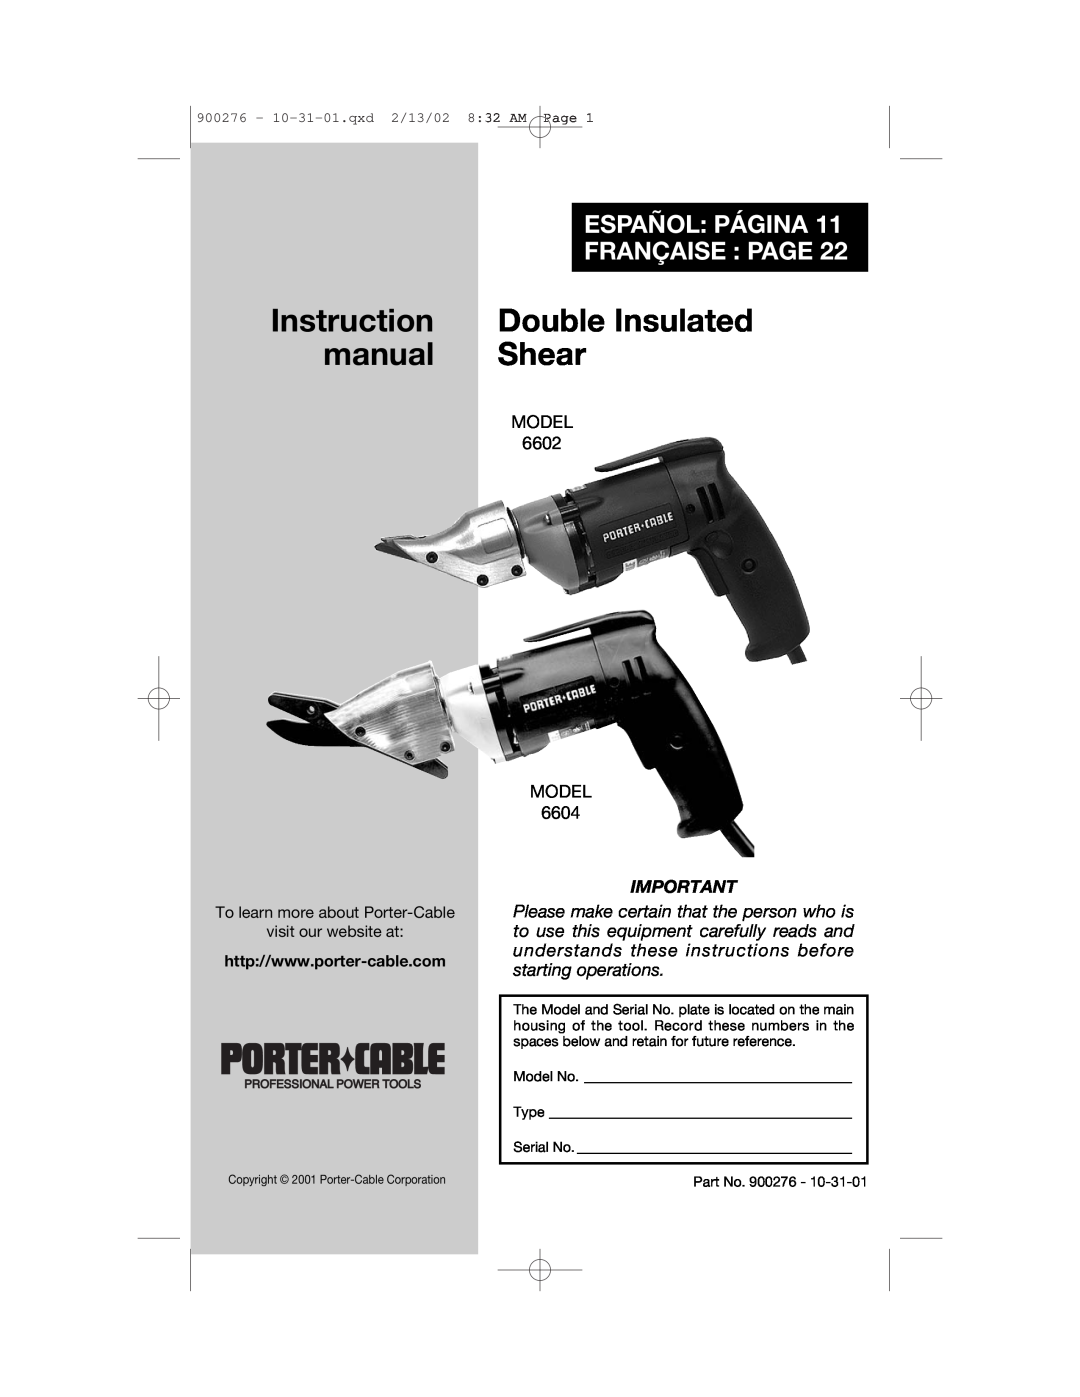 Porter-Cable 900276, 6602 instruction manual Double Insulated Shear, Español Página Française Page 